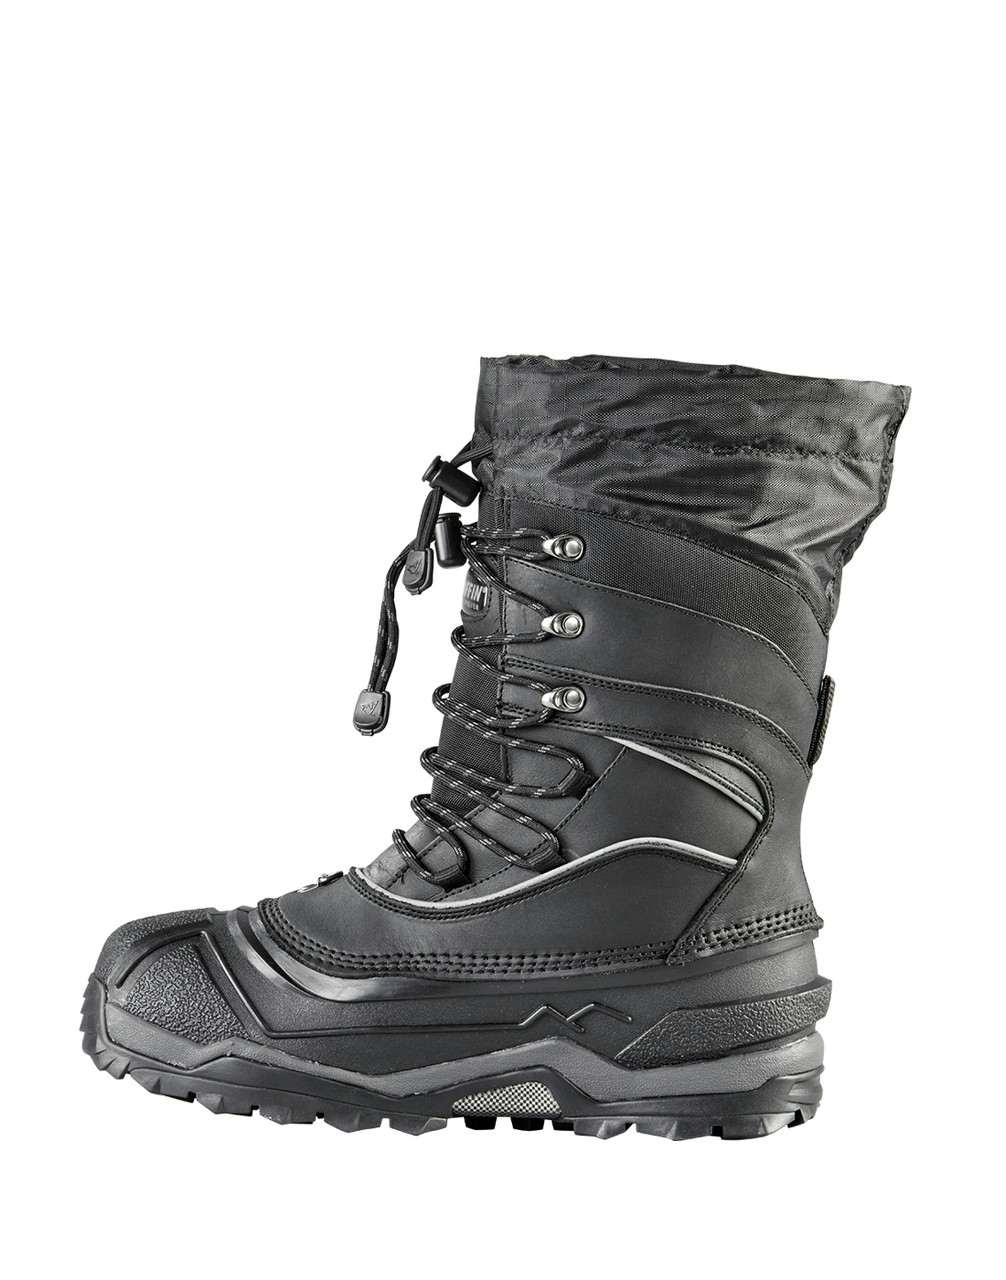 Snow Monster Waterproof Winter Boots Black